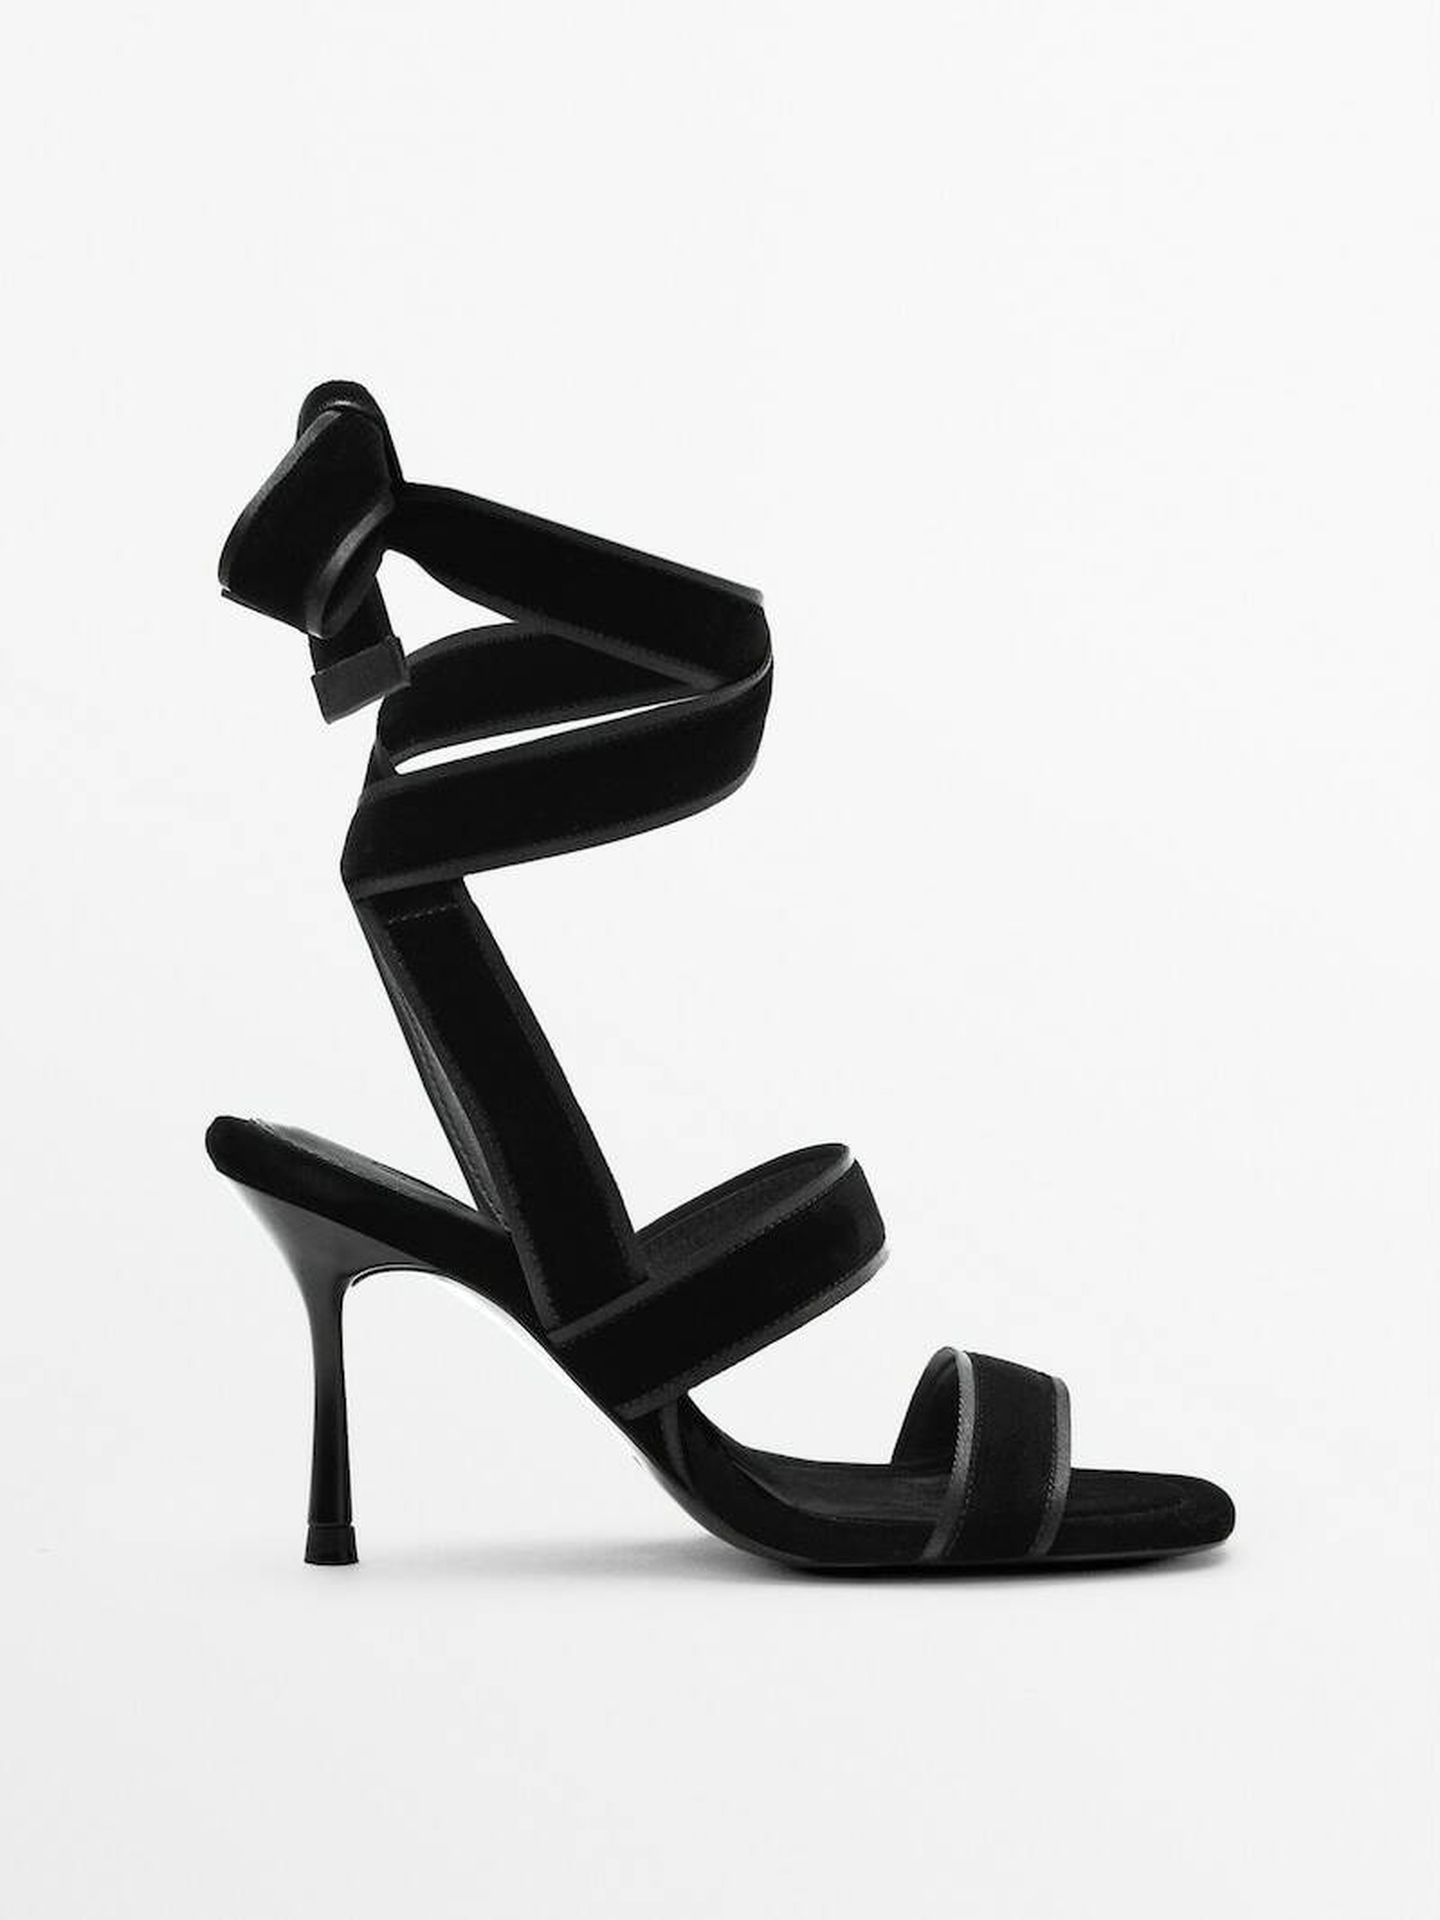 Sandalias elegantes. (Massimo Dutti/Cortesía)